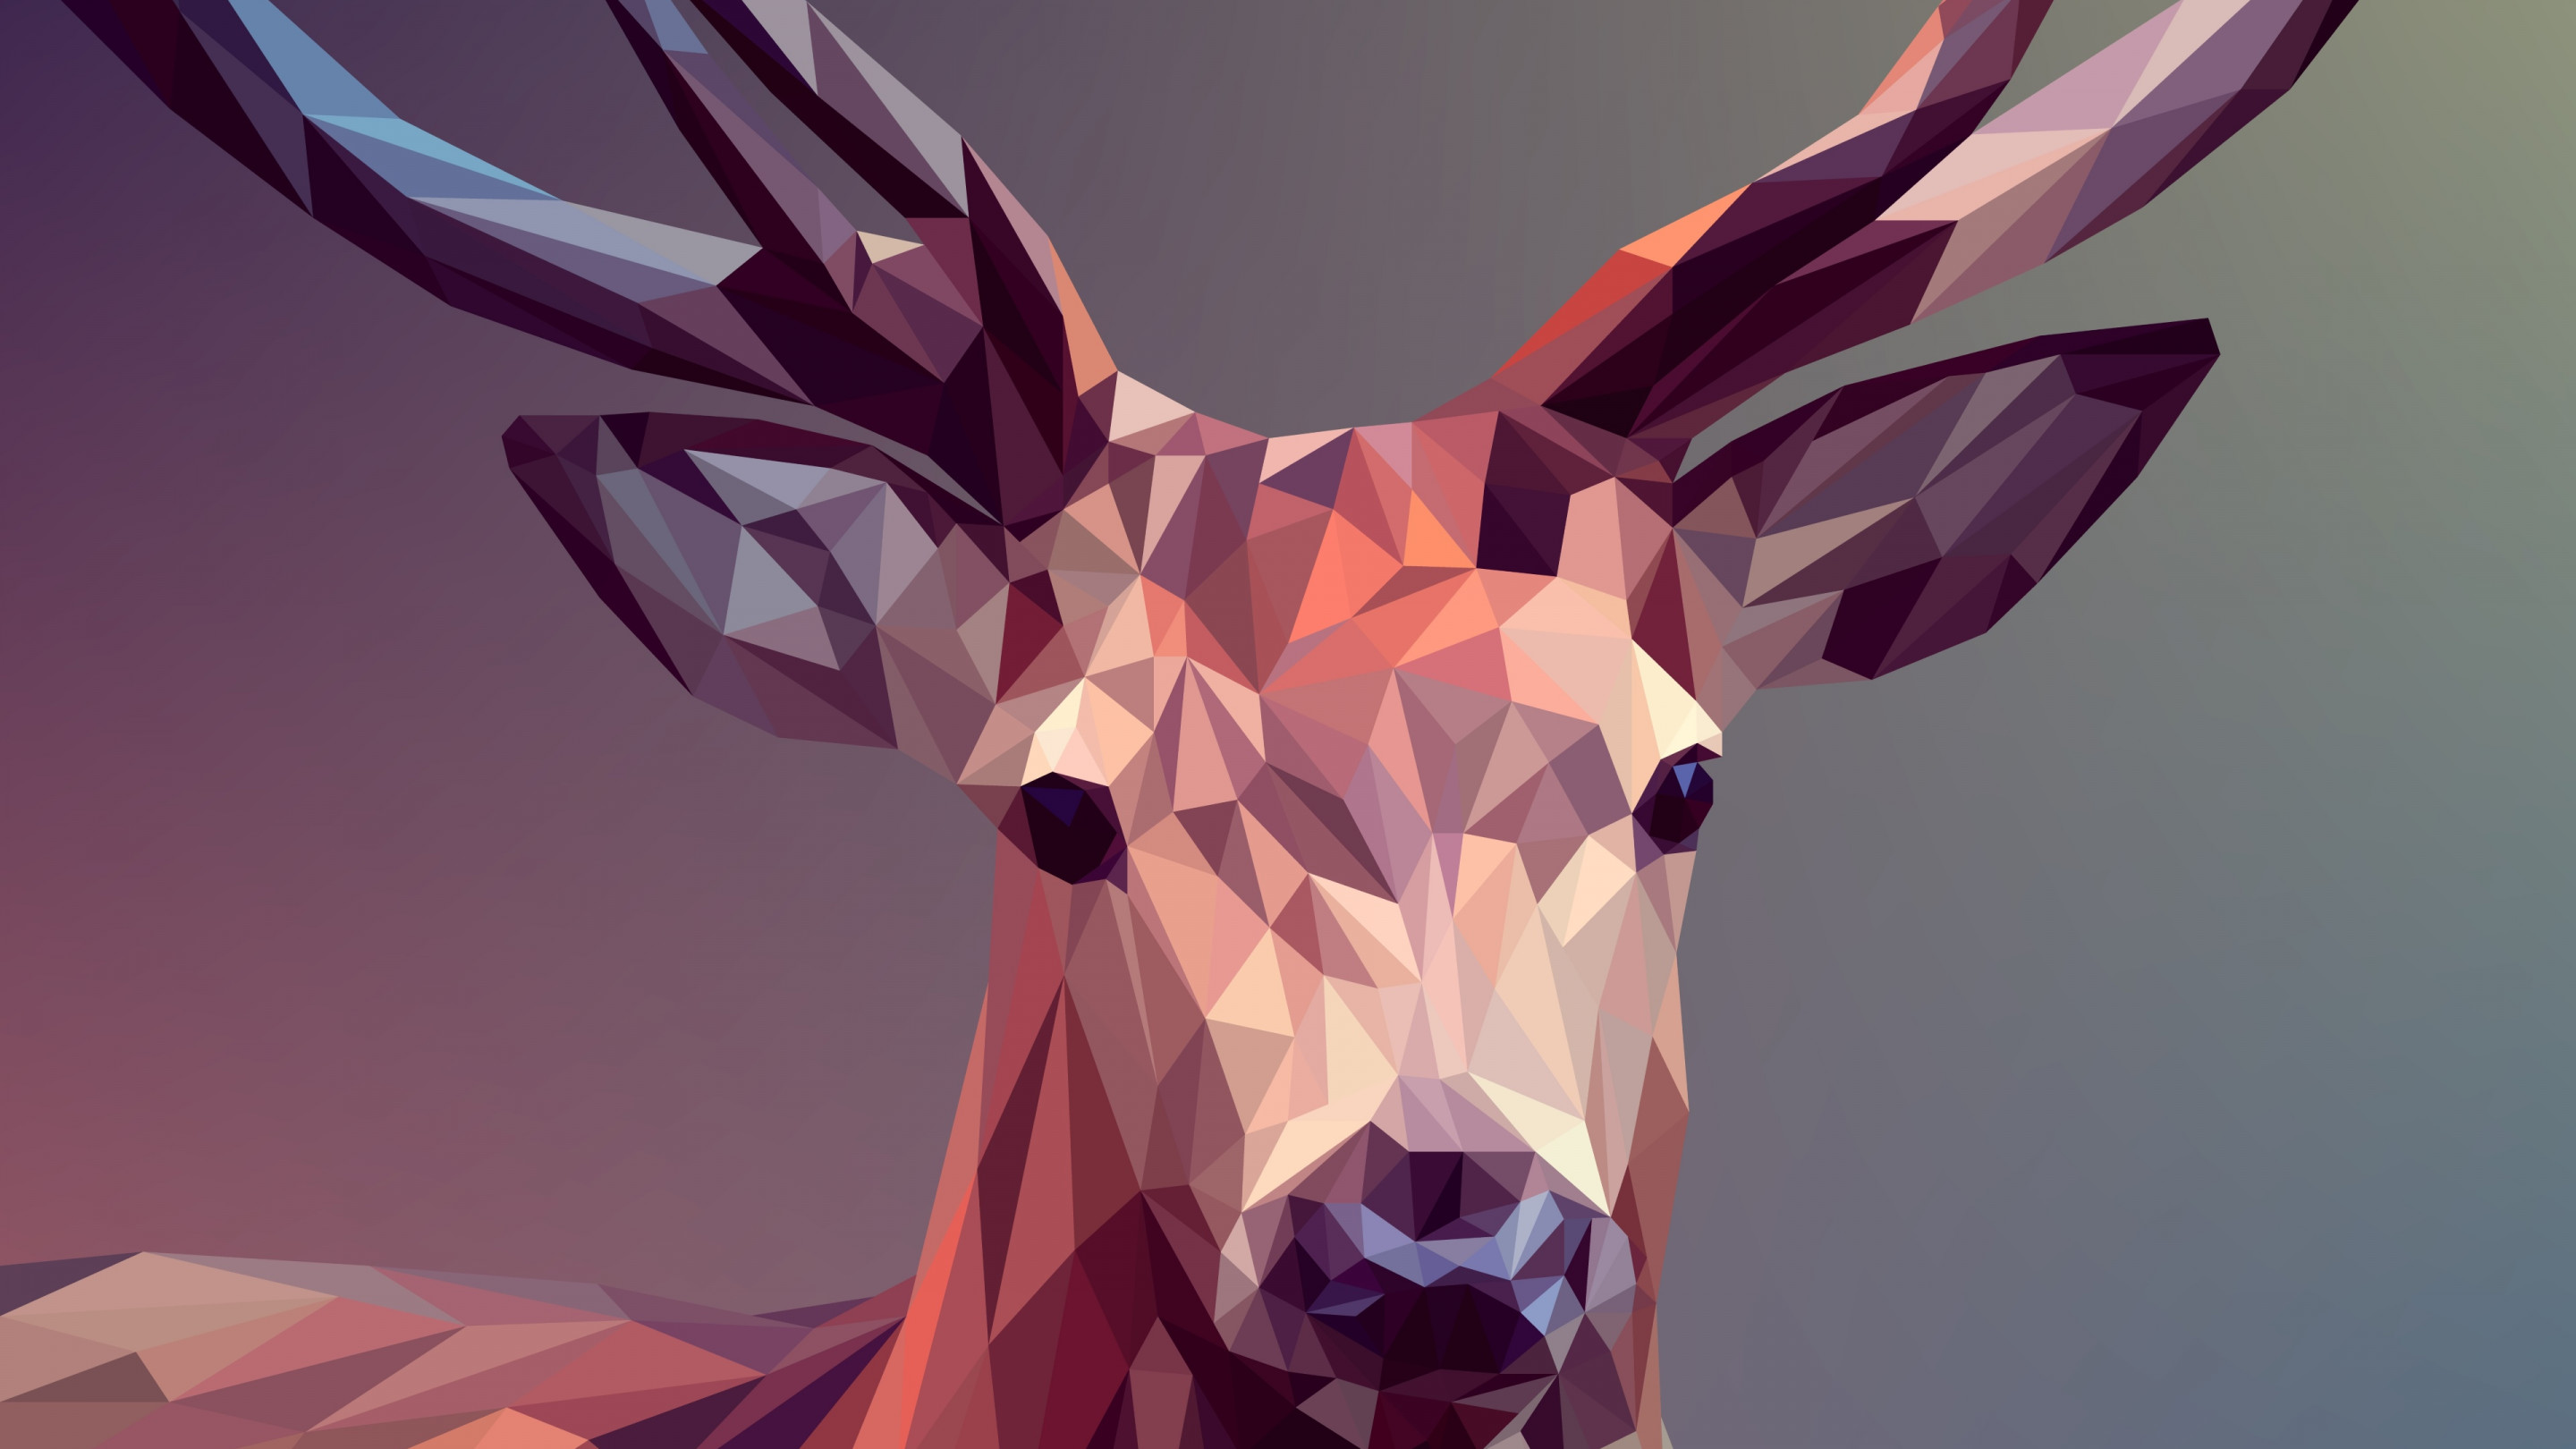 Low Poly Illustration: Deer wallpaper 2880x1620